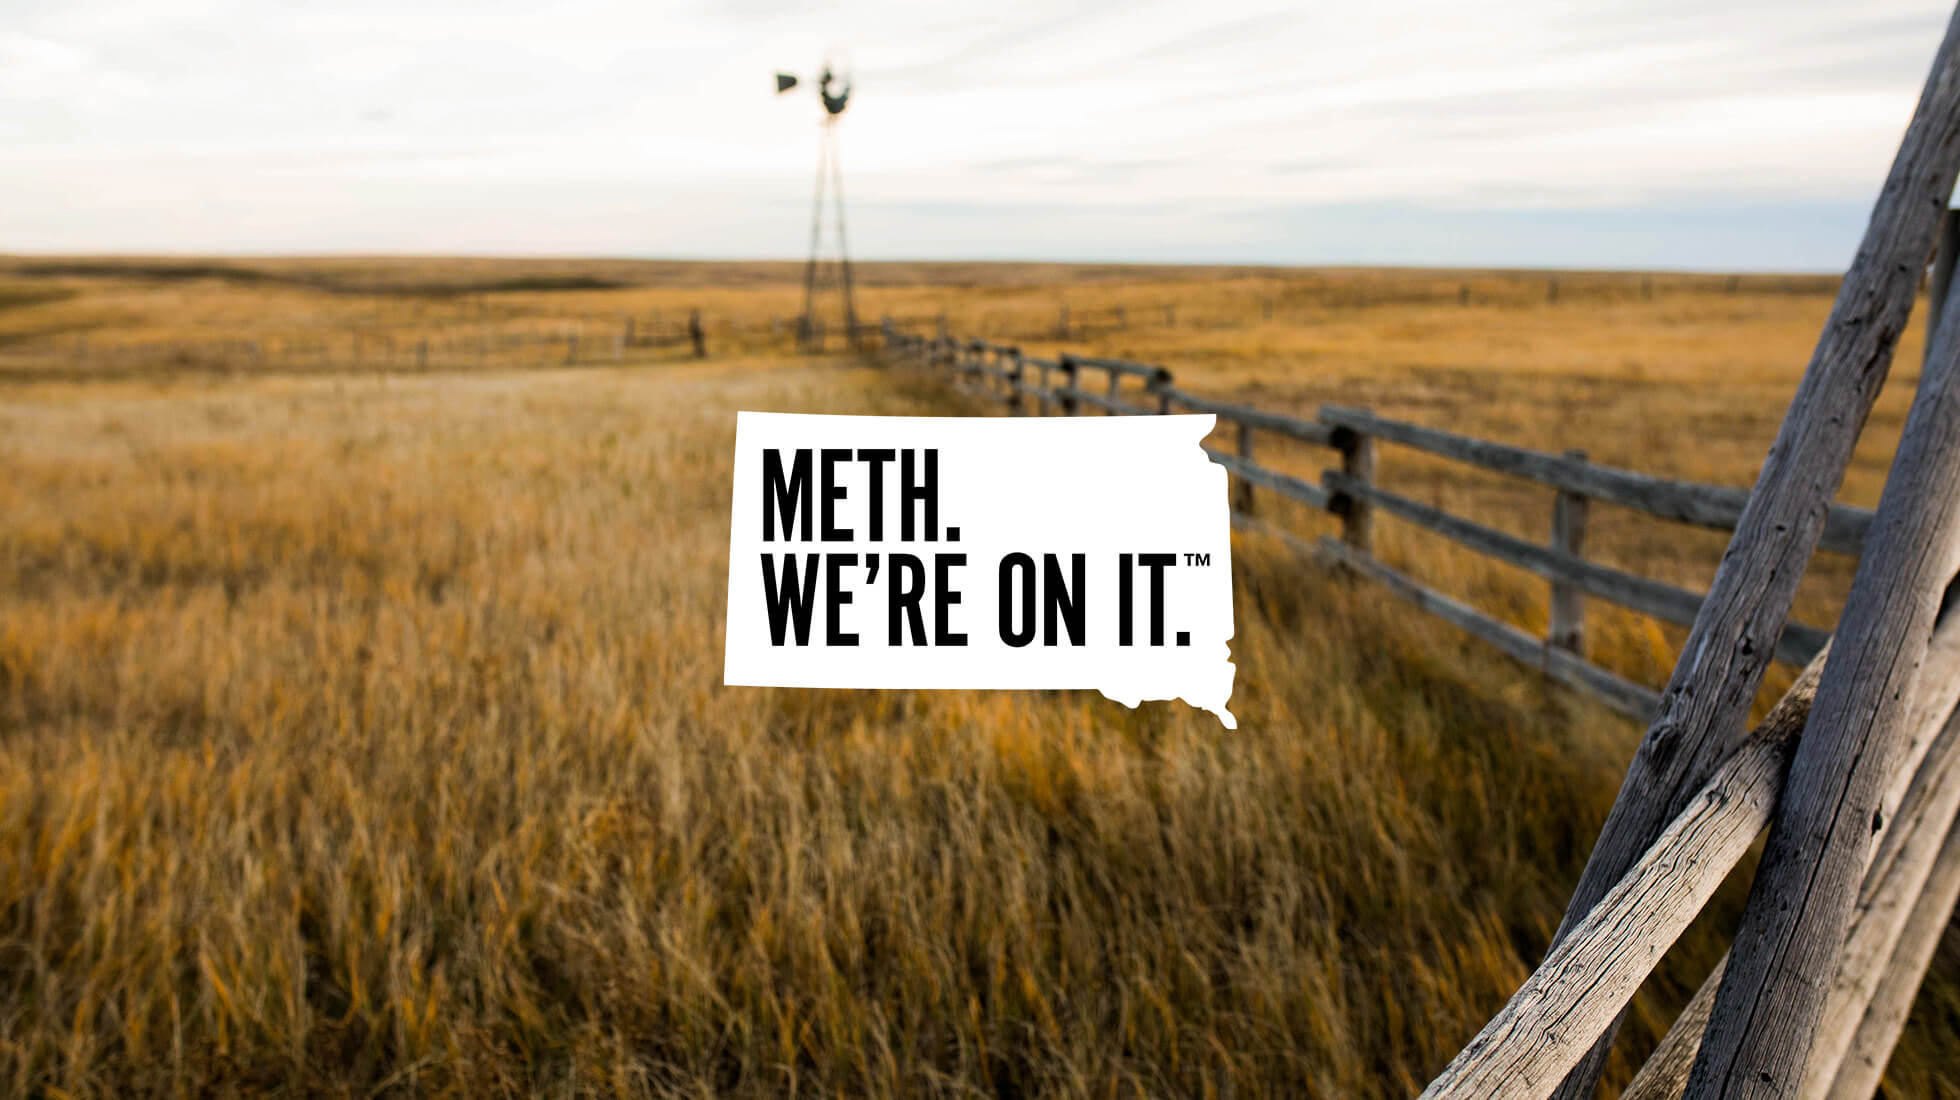 South Dakota Meth We're On It ad campaign